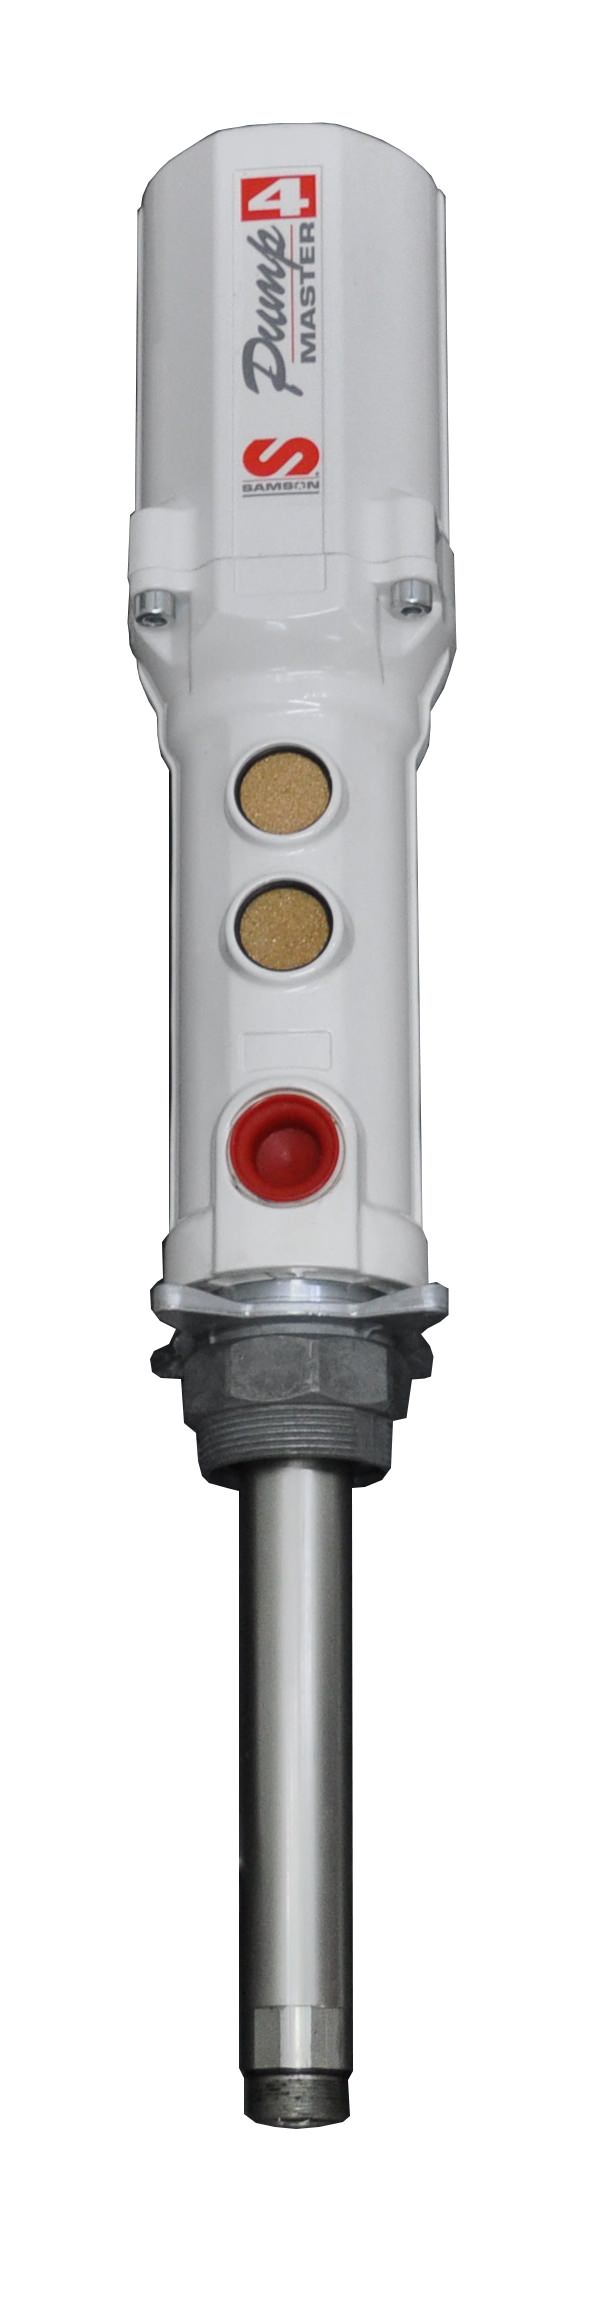 PumpMaster 4 5:1 Air Operated Oil Pump